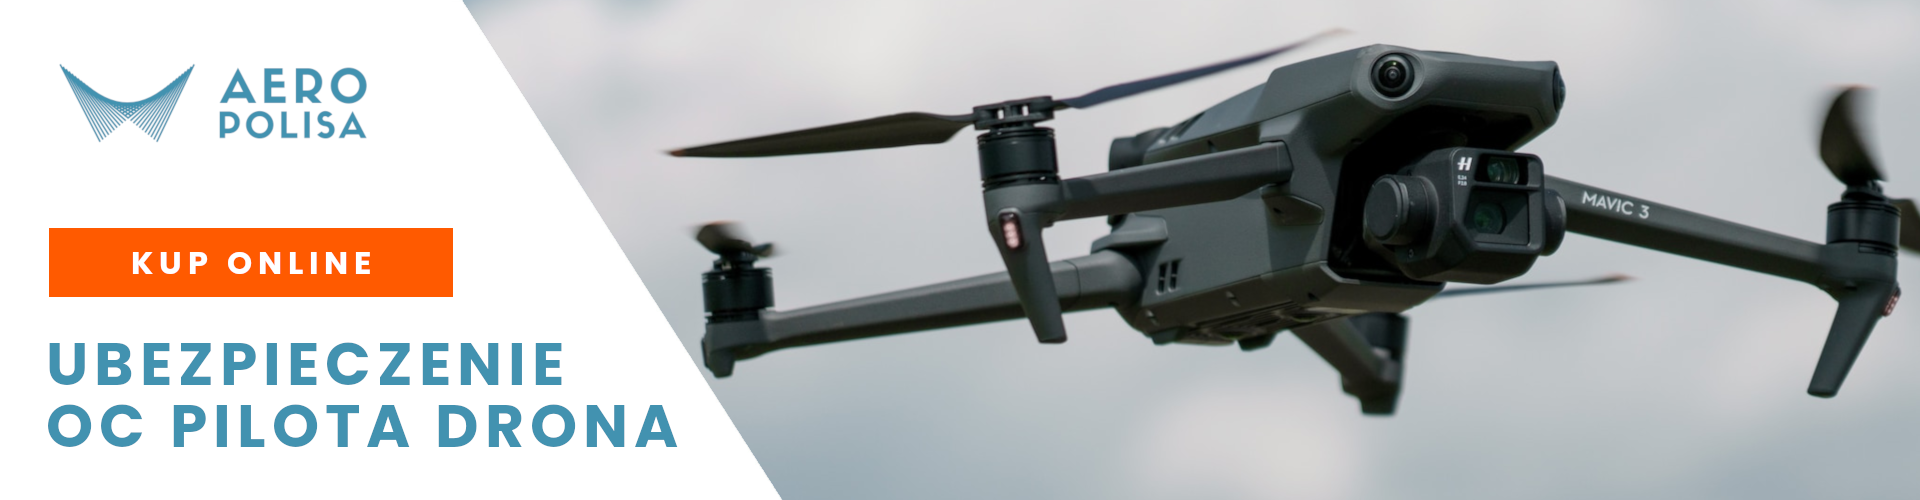 https://aeropolisa.pl/drony/oc-pilota-drona?afI=980&kid=12&af=919d5ae8717291b16cbf77c9c11fe079